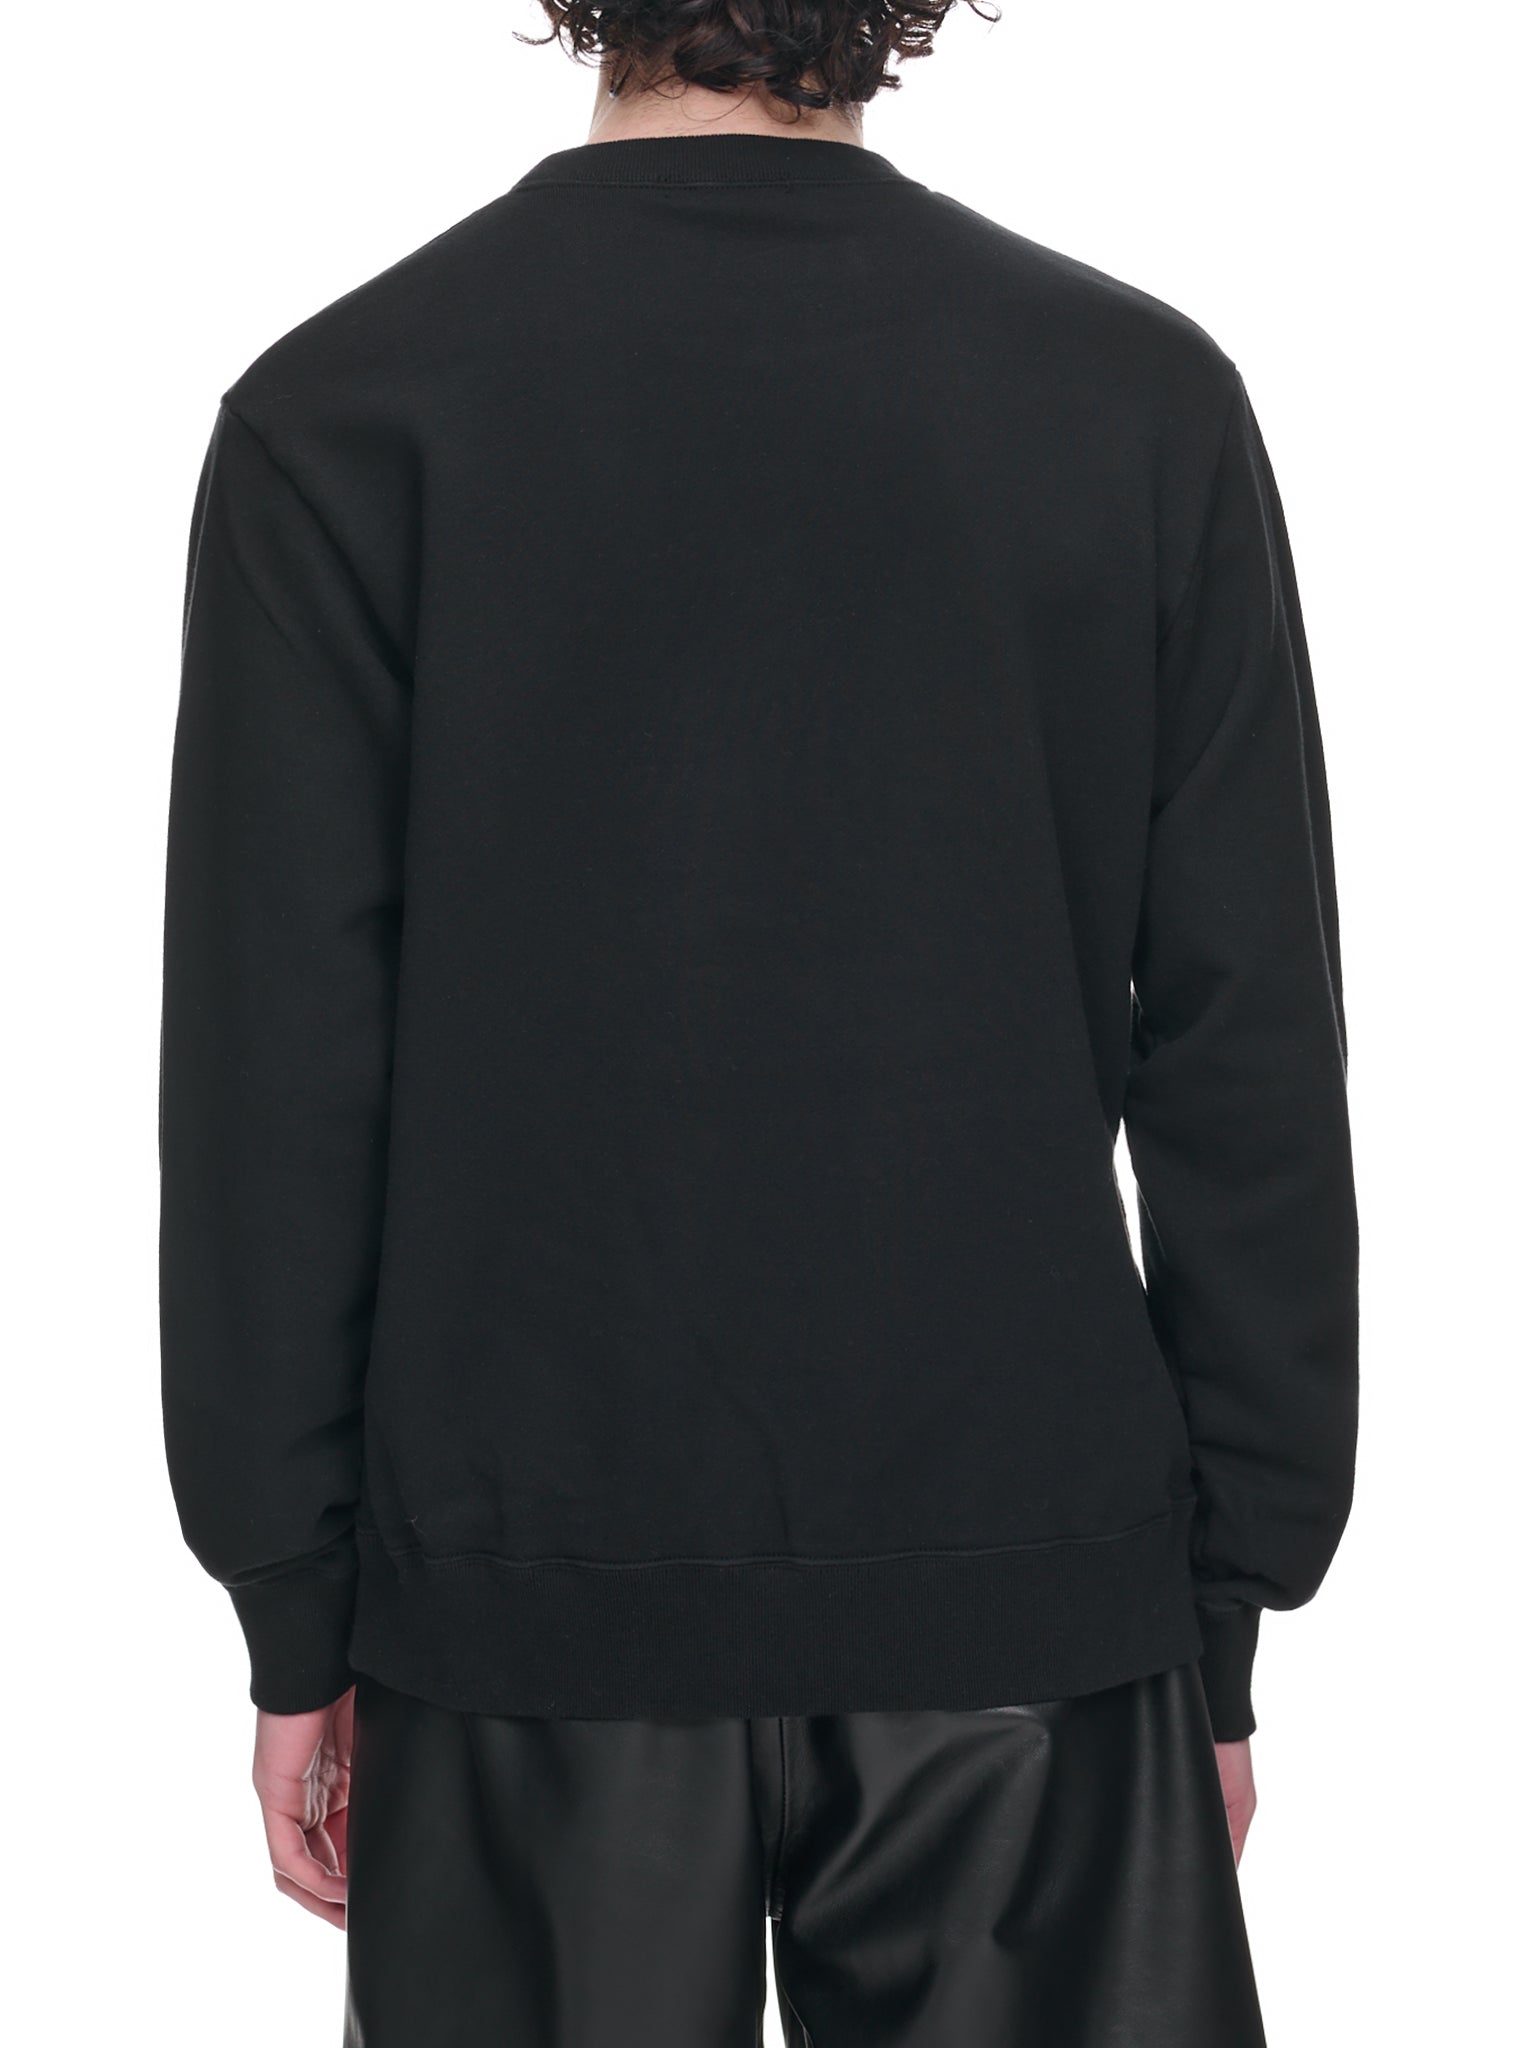 Post Punk Sweater (UC1C4891-1-BLACK)